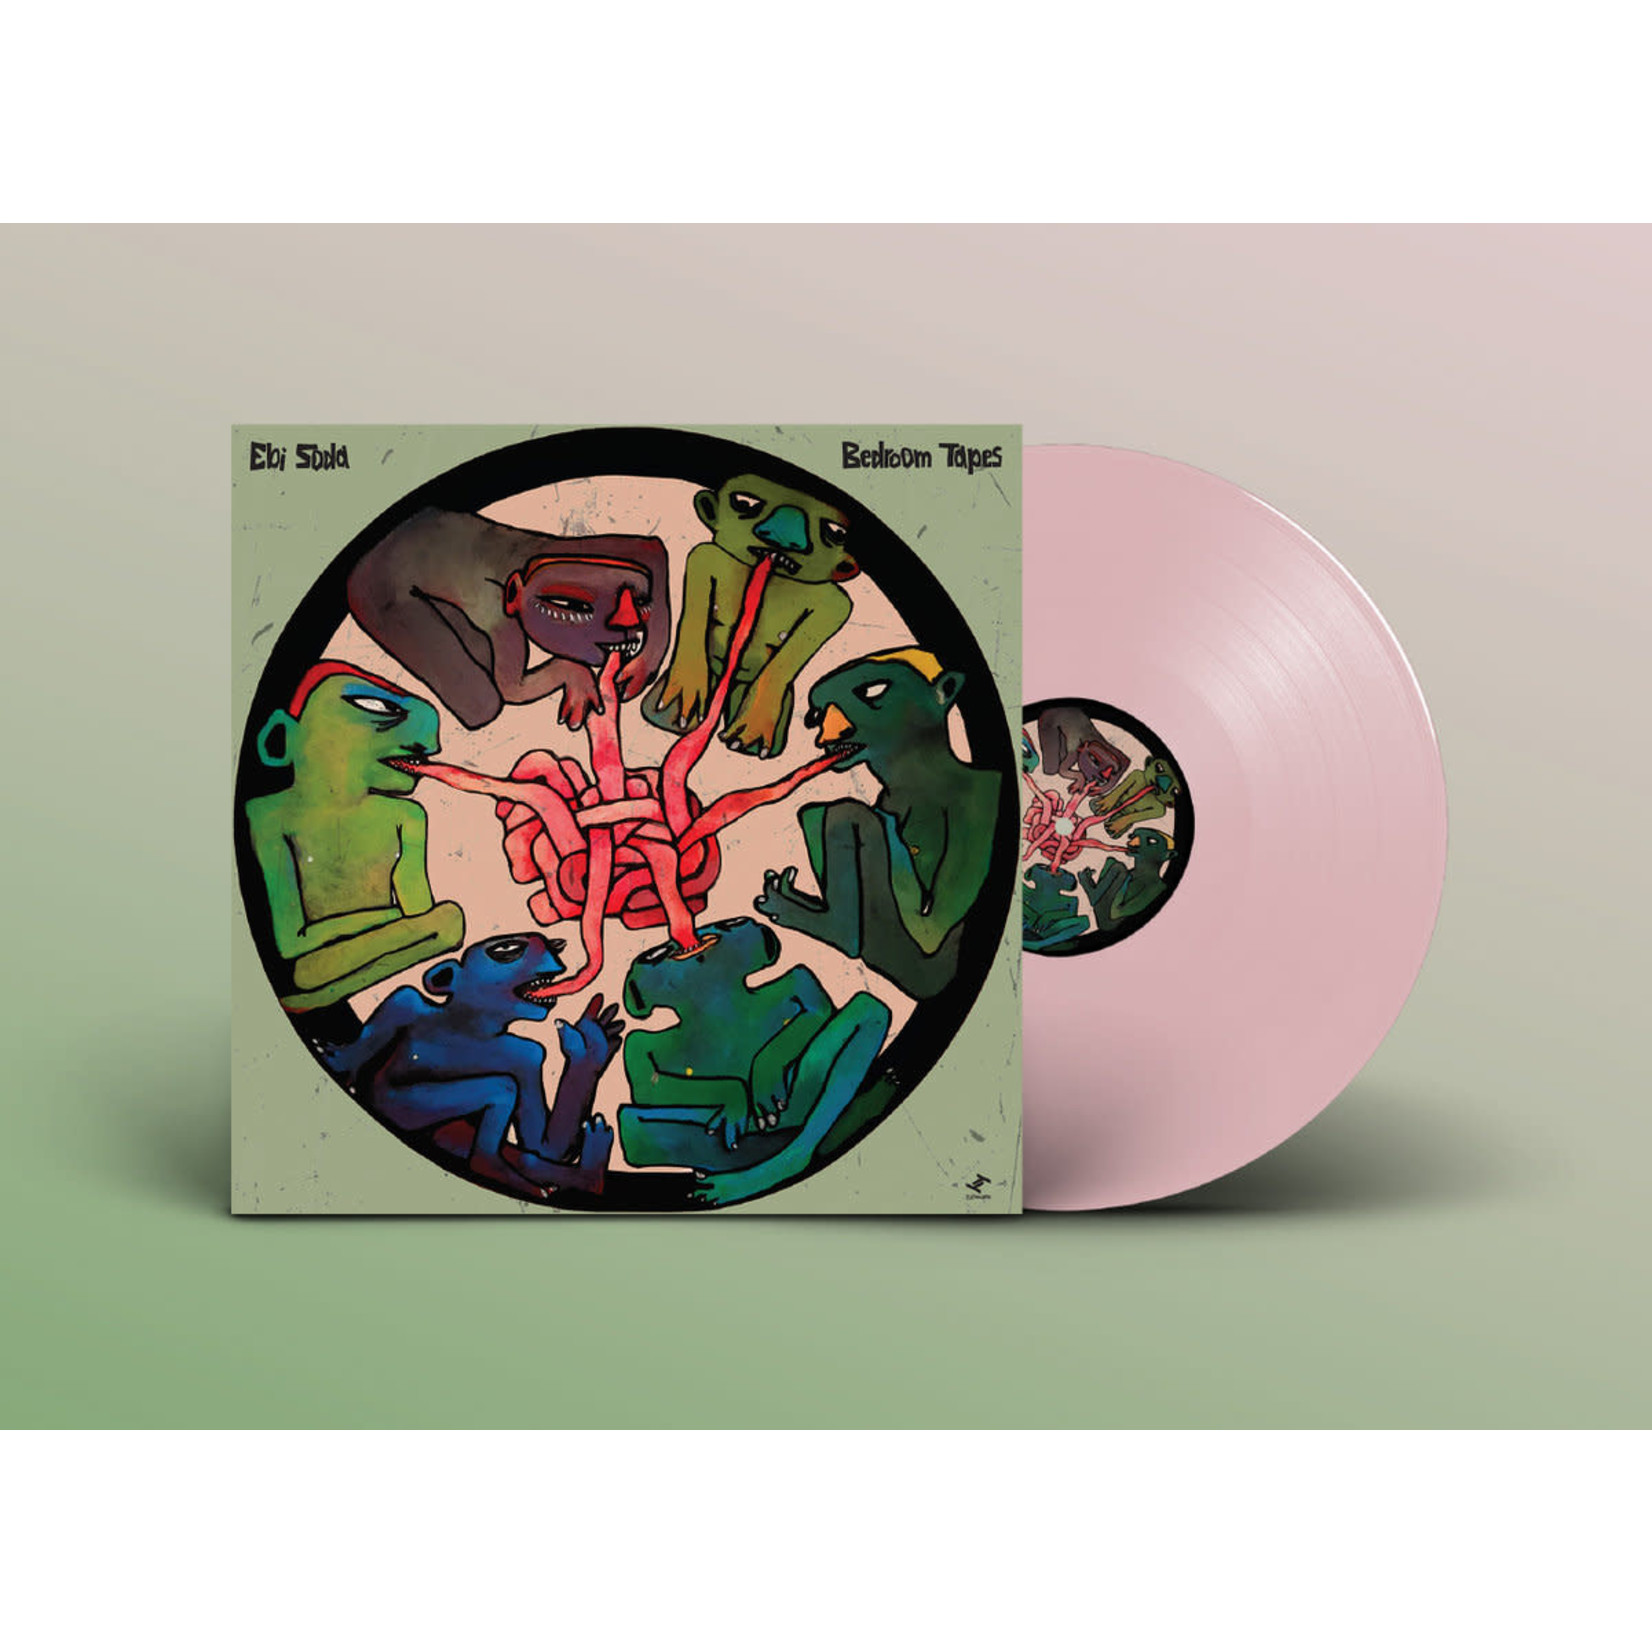 [New] Ebi Soda - Bedroom Tapes (12"EP, pink vinyl)